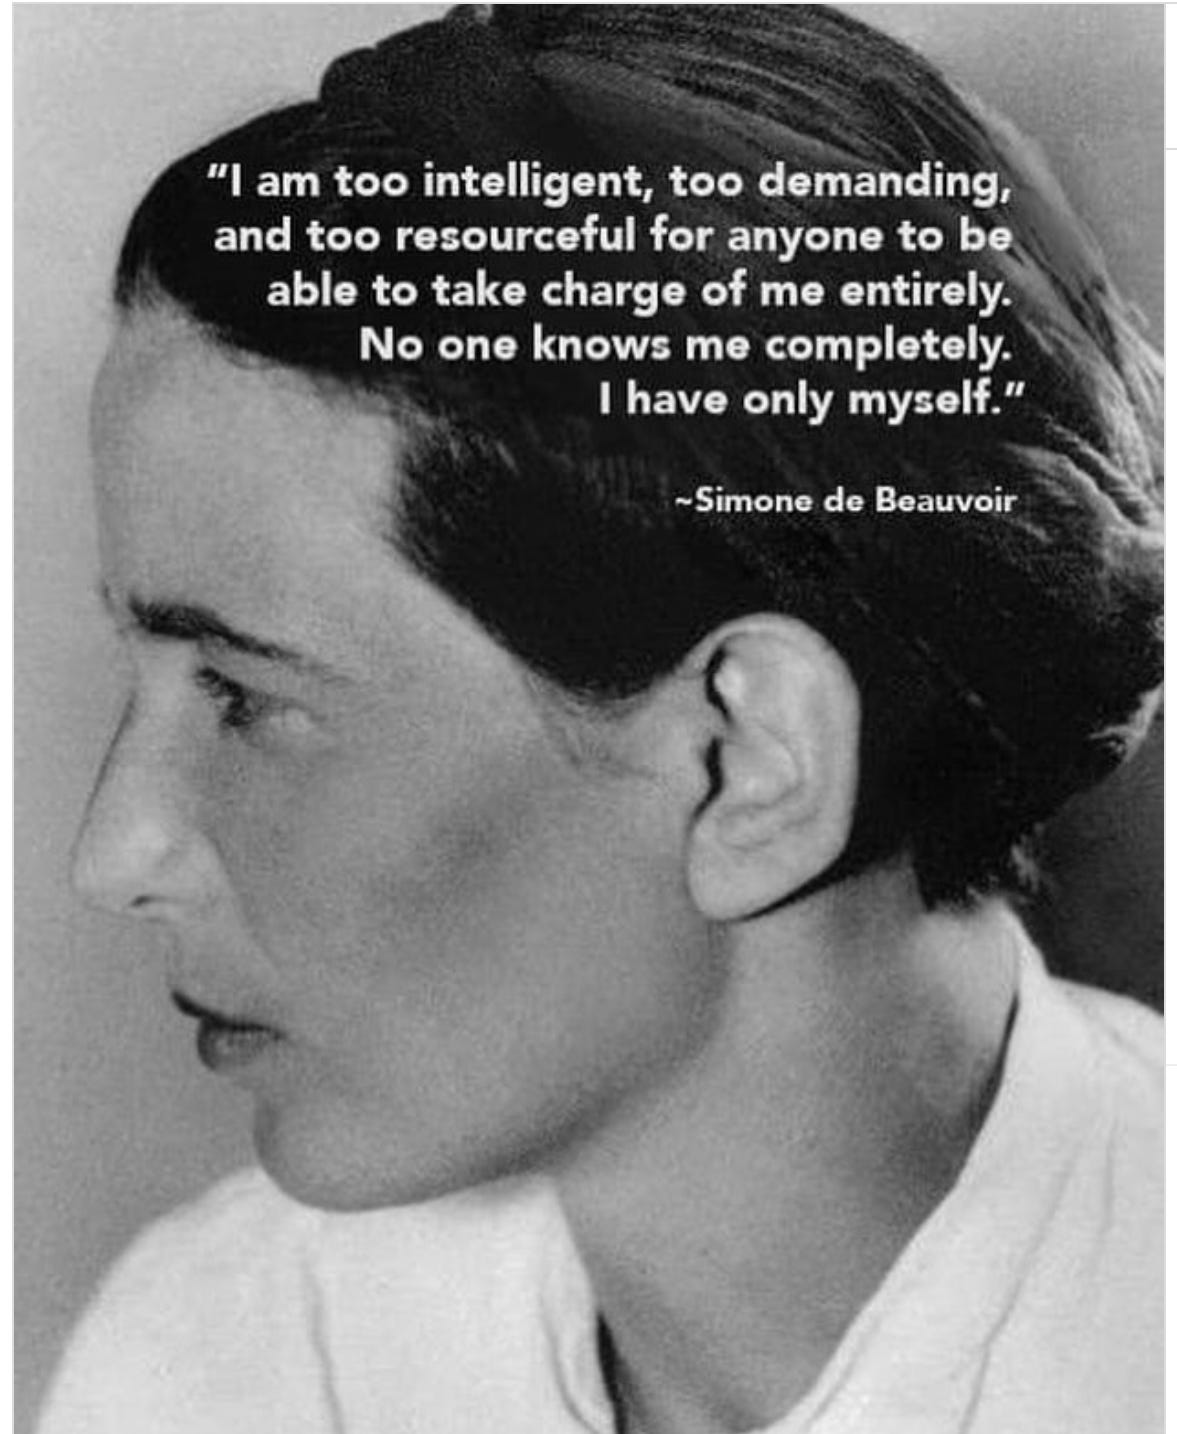 Simone de Beauvoir photo and quote